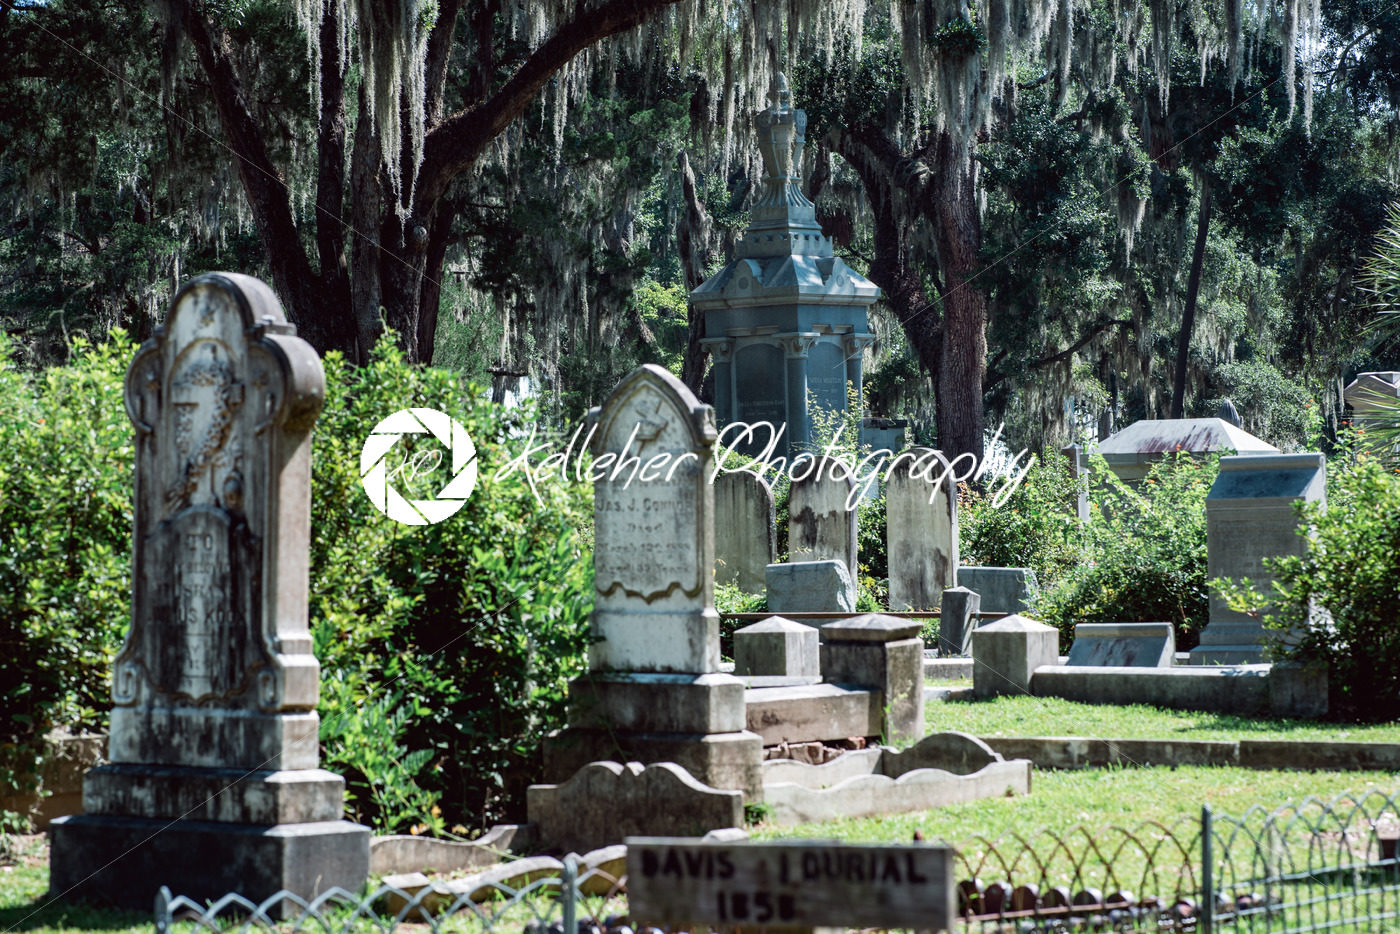 Cemetery Statuary Statue Bonaventure Cemetery Savannah Georgia - Kelleher Photography Store